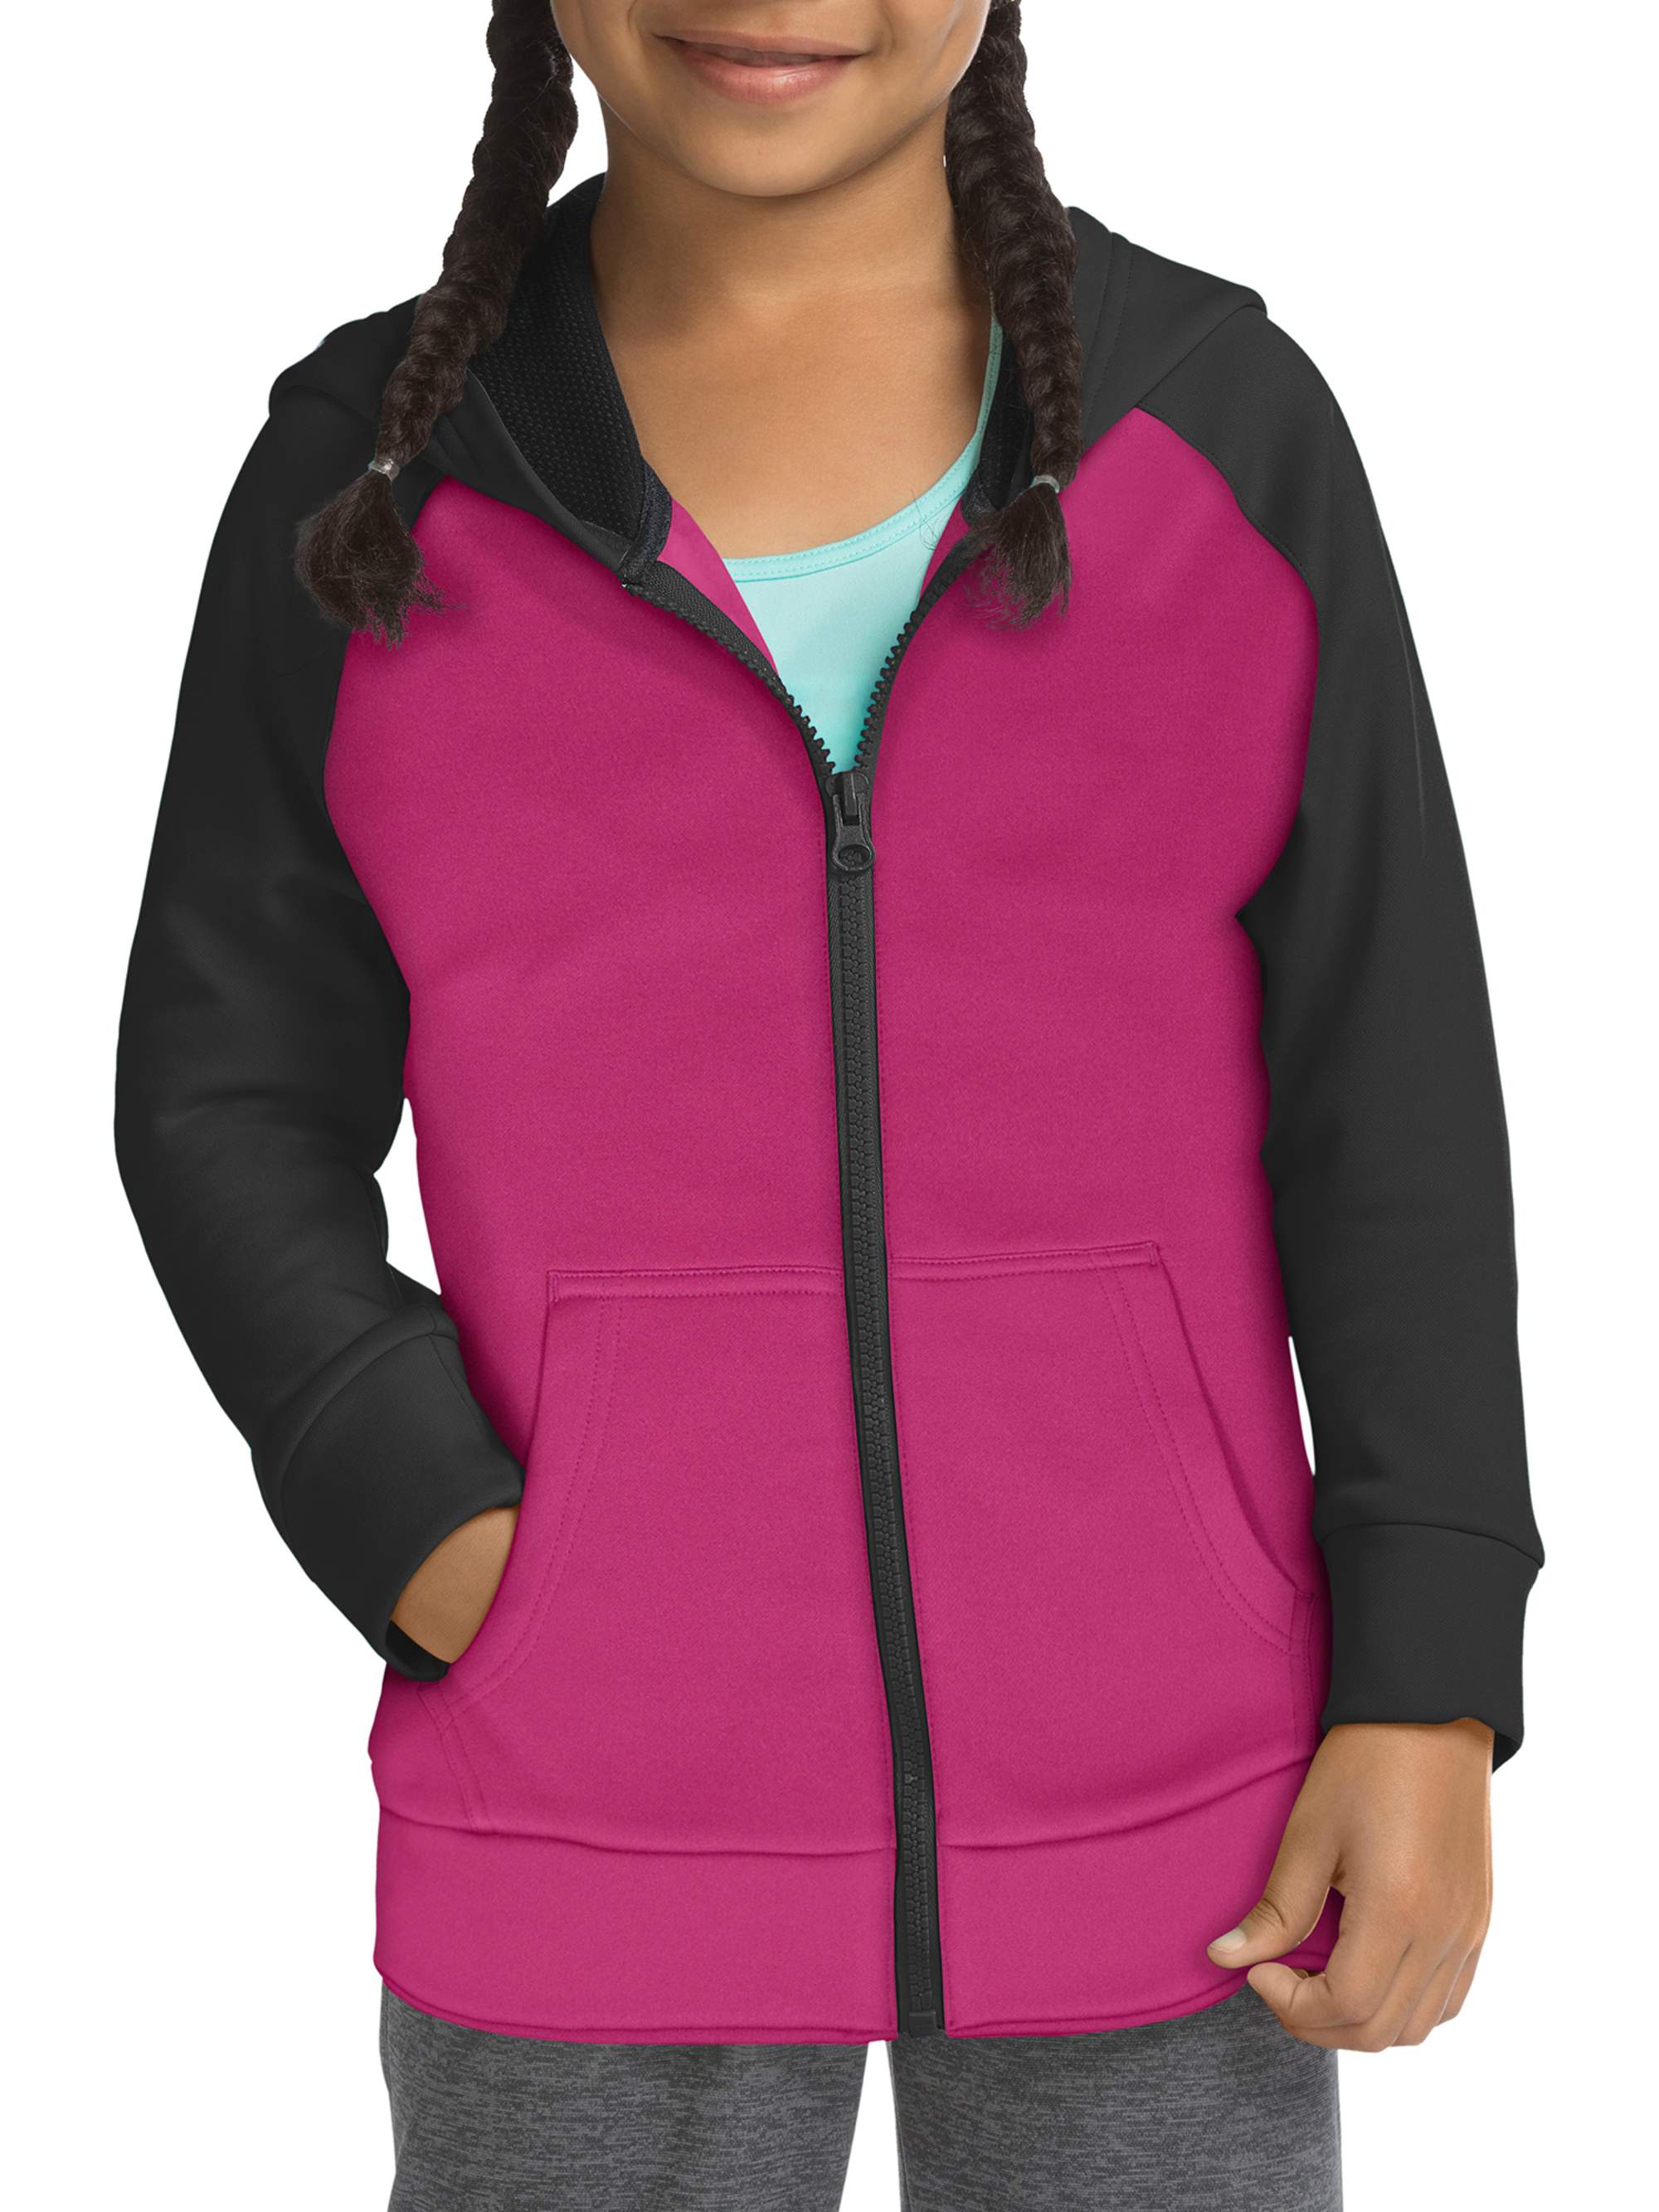 Hanes Sport Tech Fleece Full Zip Hooded Jacket (Little Girls & Big Girls) - image 1 of 3